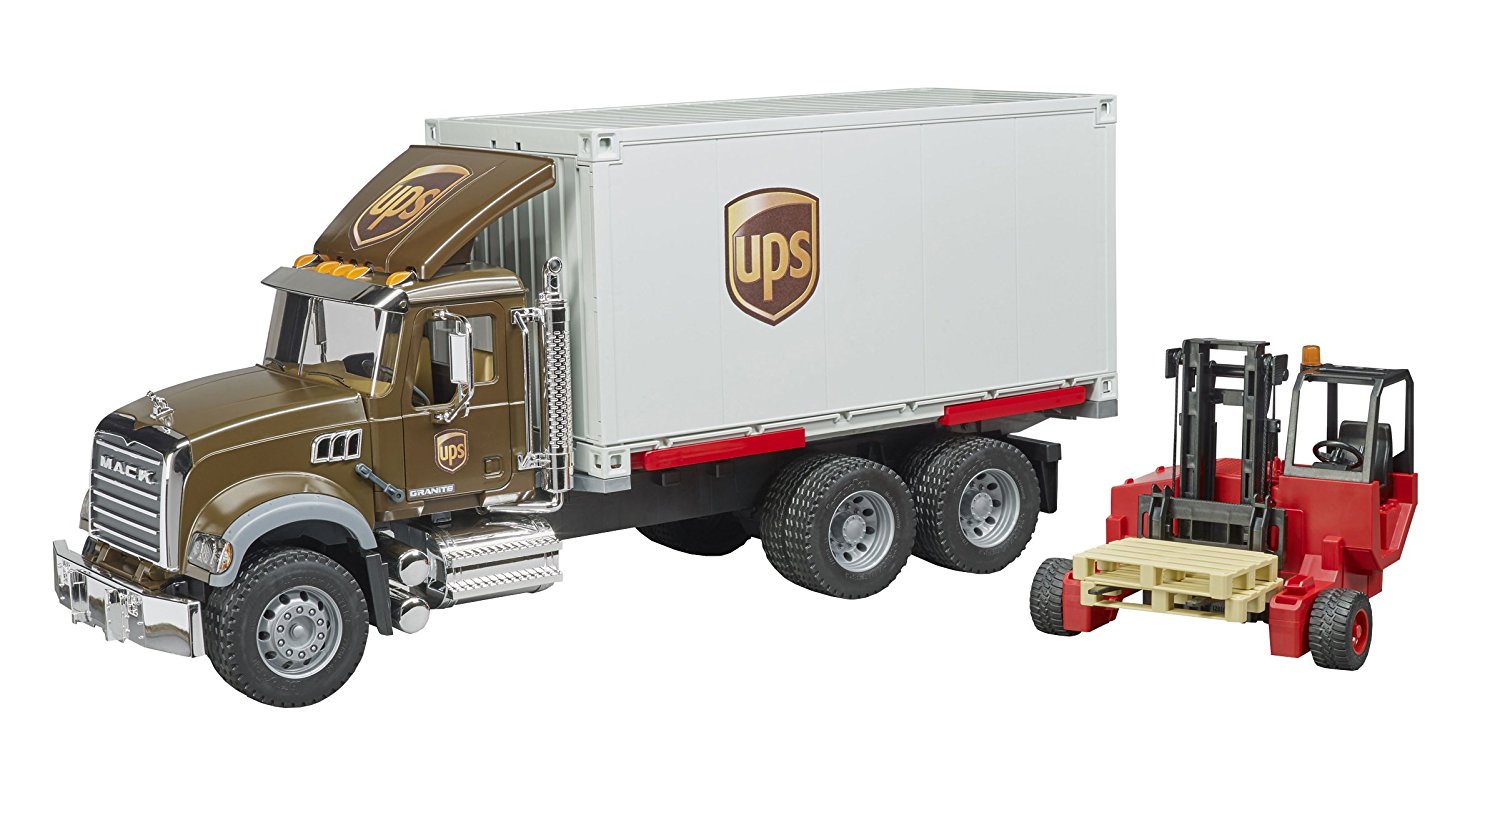 MACK Granite camion UPS portacontainer con muletto